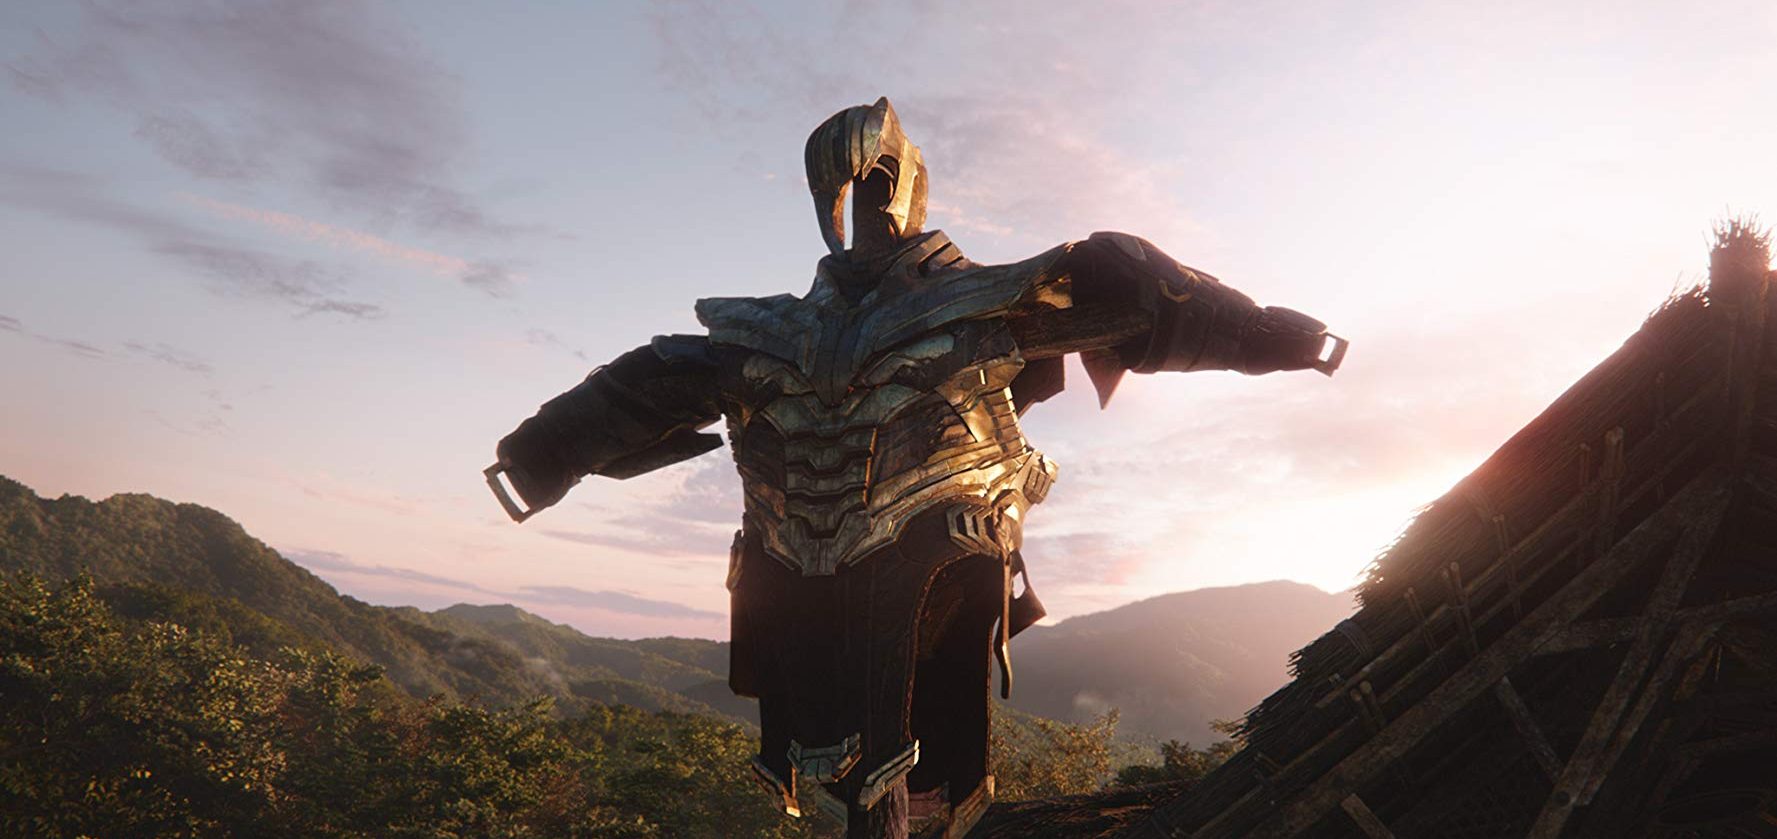 Avengers Endgame Original Title Revealed To Be Infinity Gauntlet